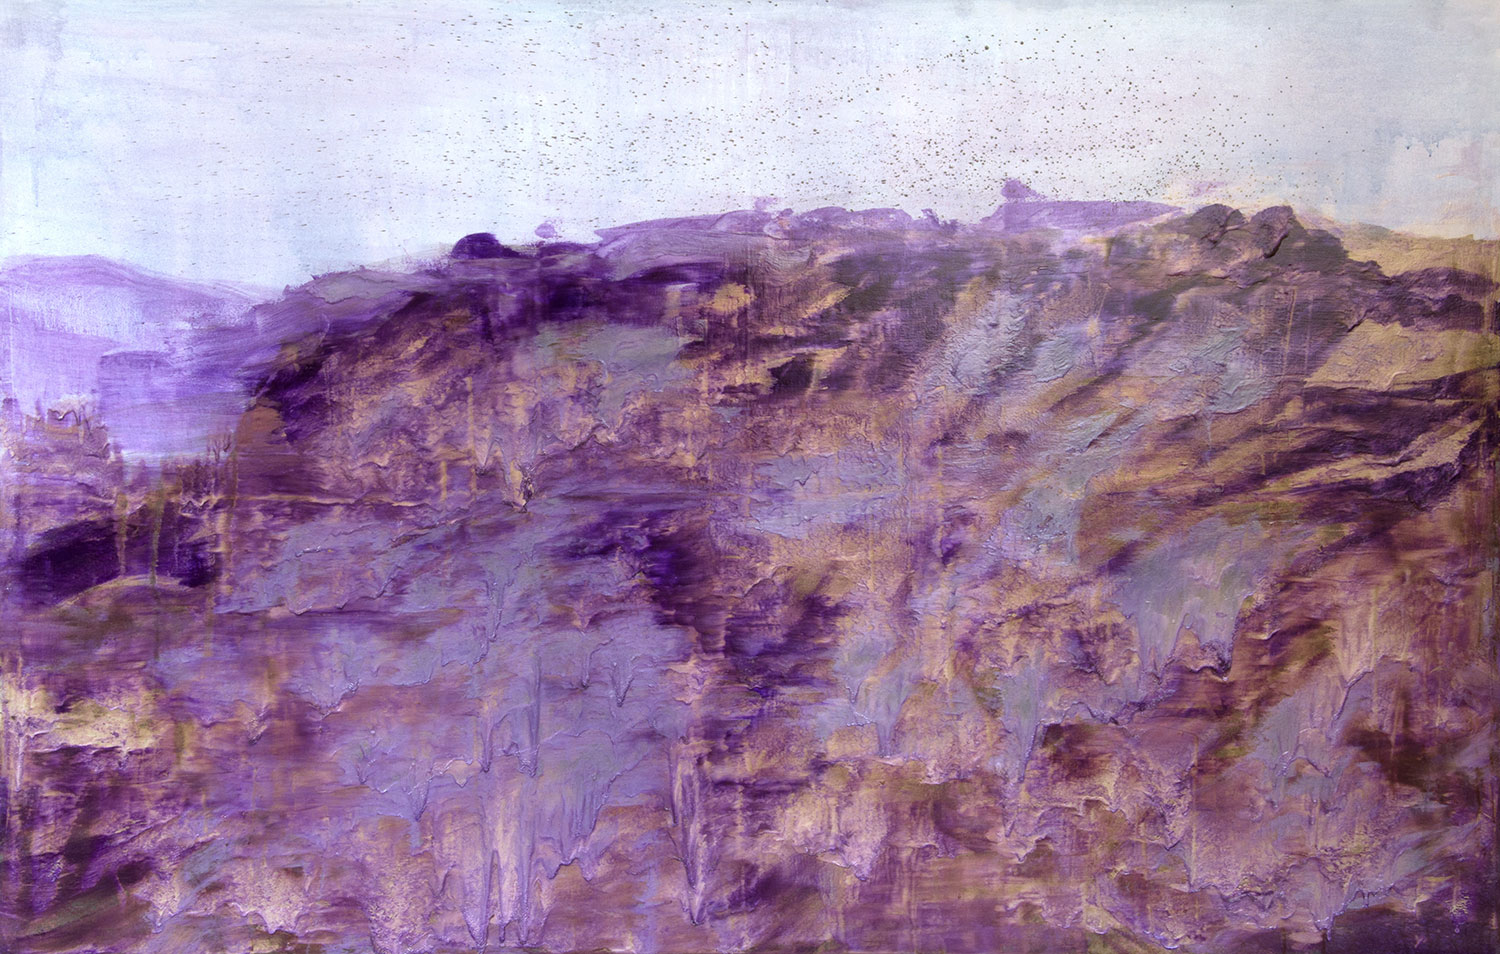 Pablo Gonzalez-Trejo, Untitled (Landscape), 130 x 195 cm, Oil and Pearls on canvas, 2016